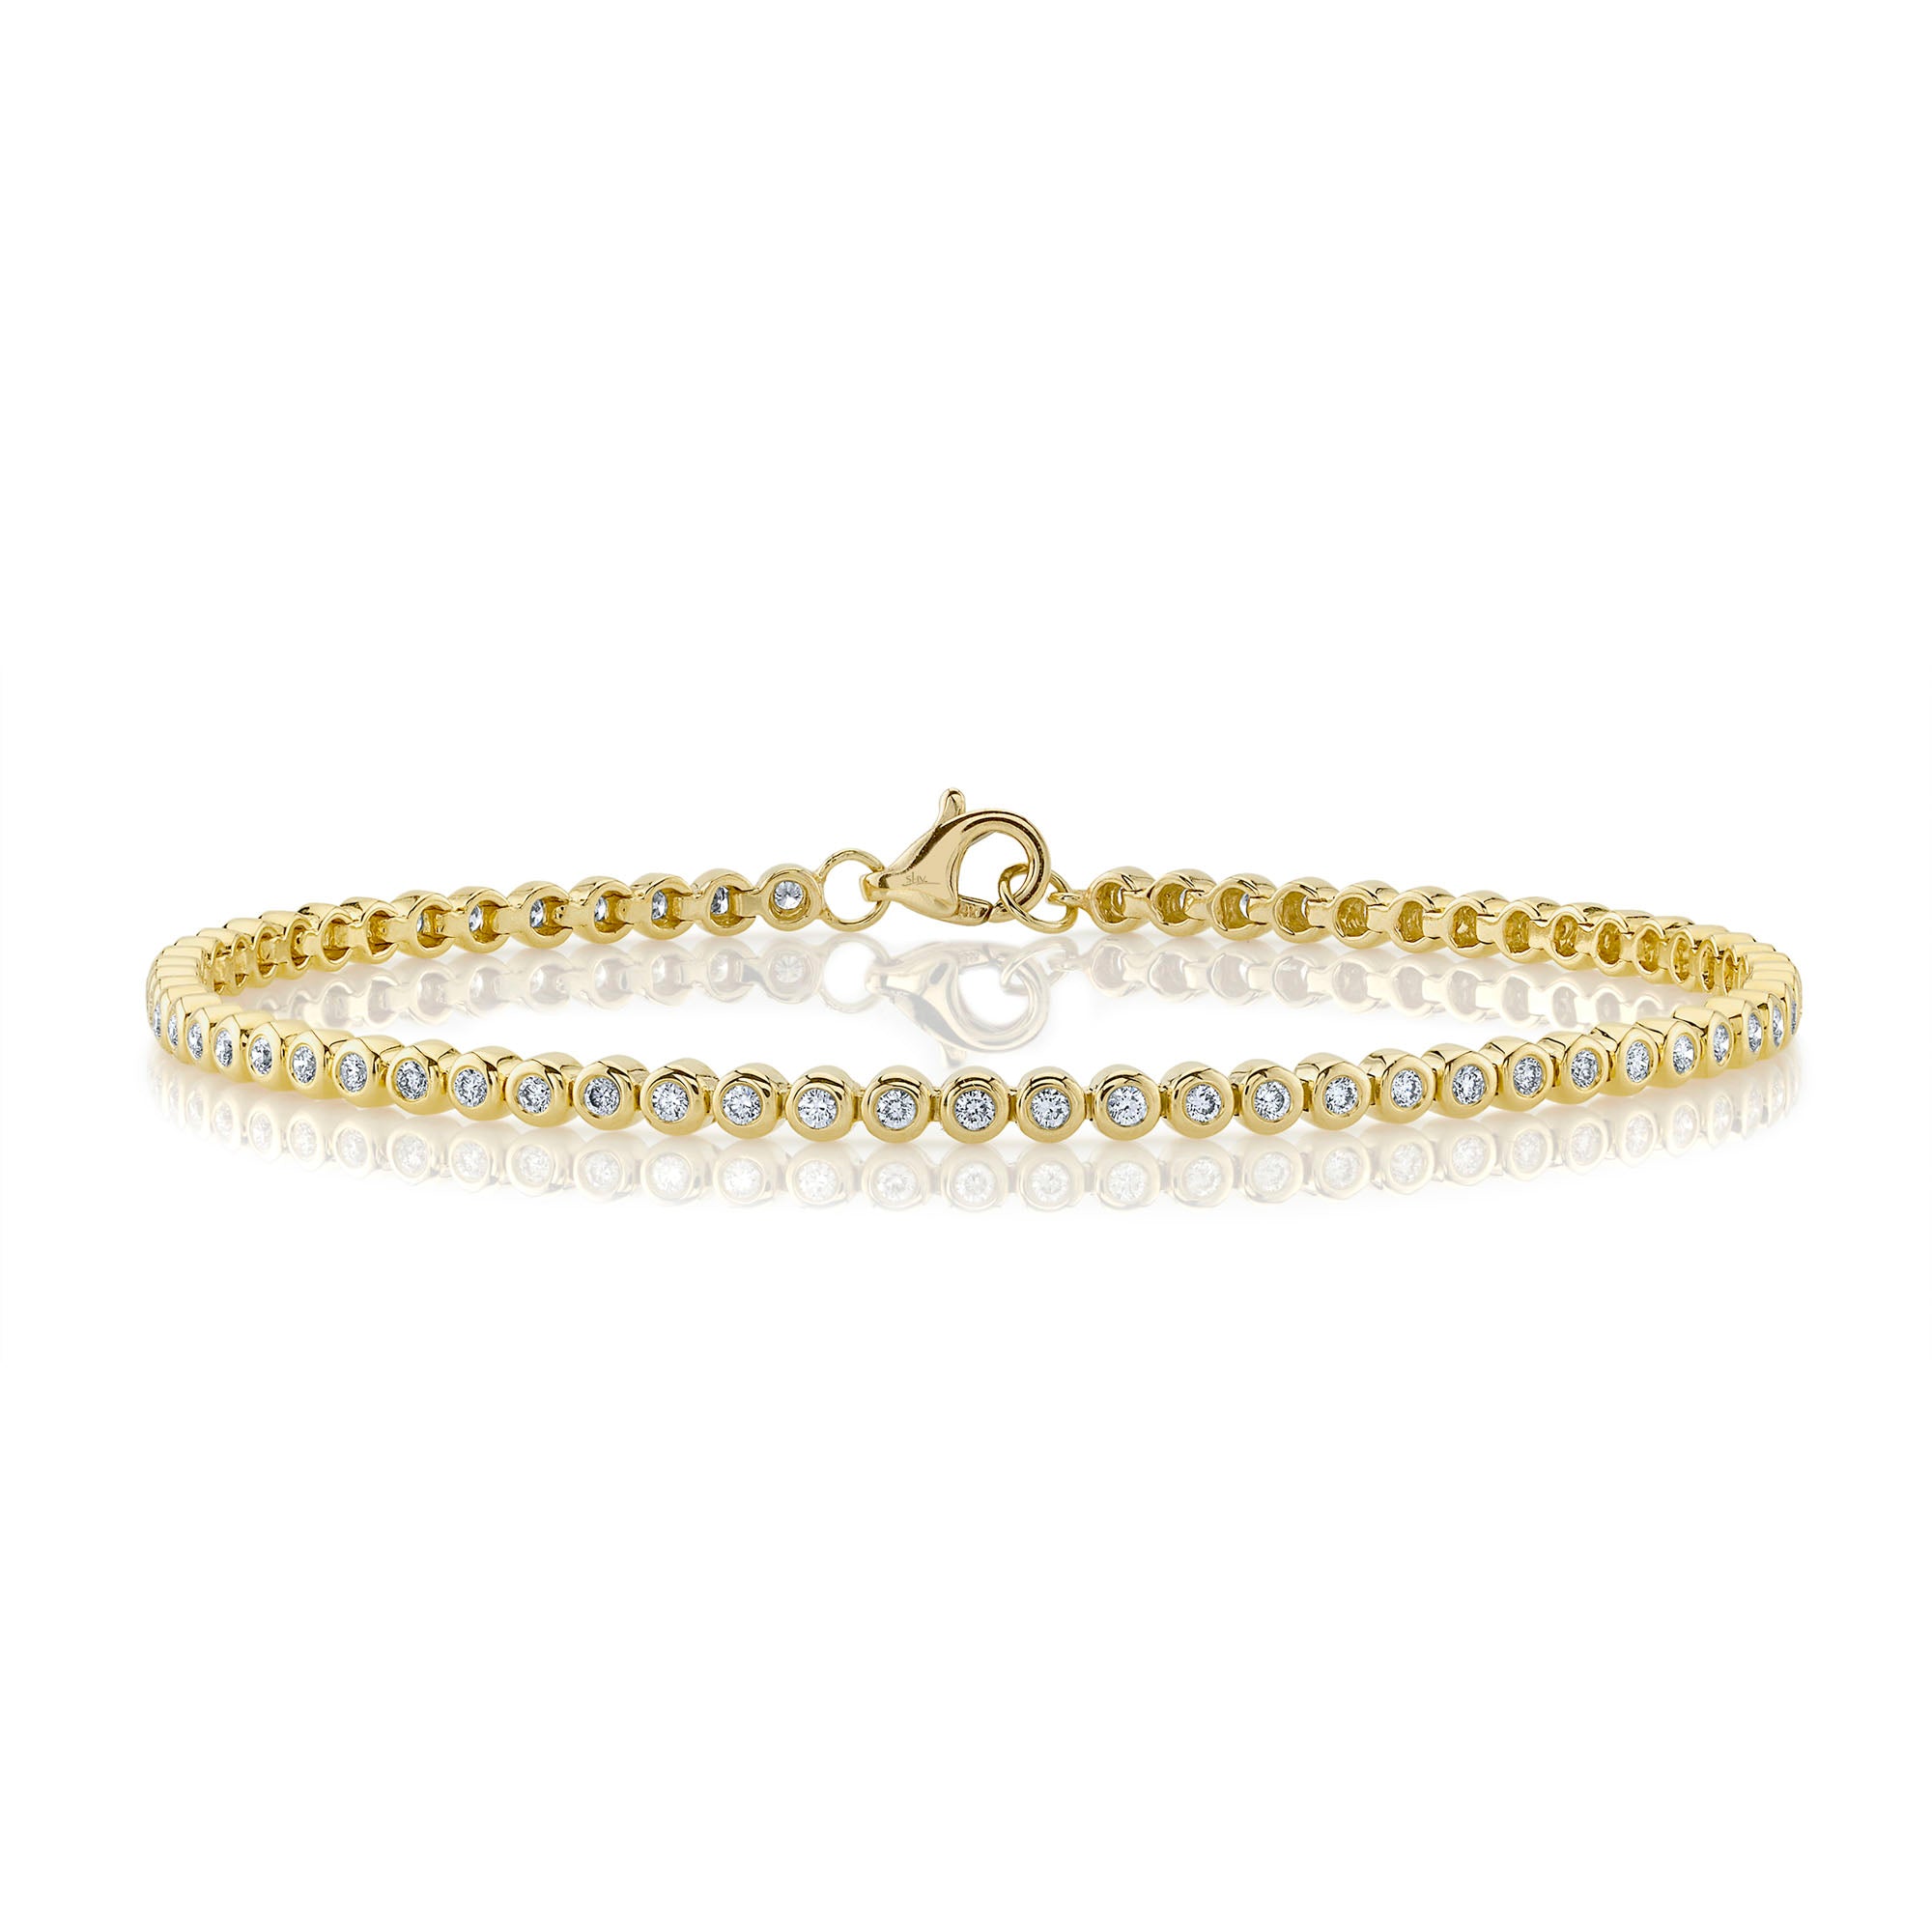 14 kt yellow gold tennis bracelets - sc55022469